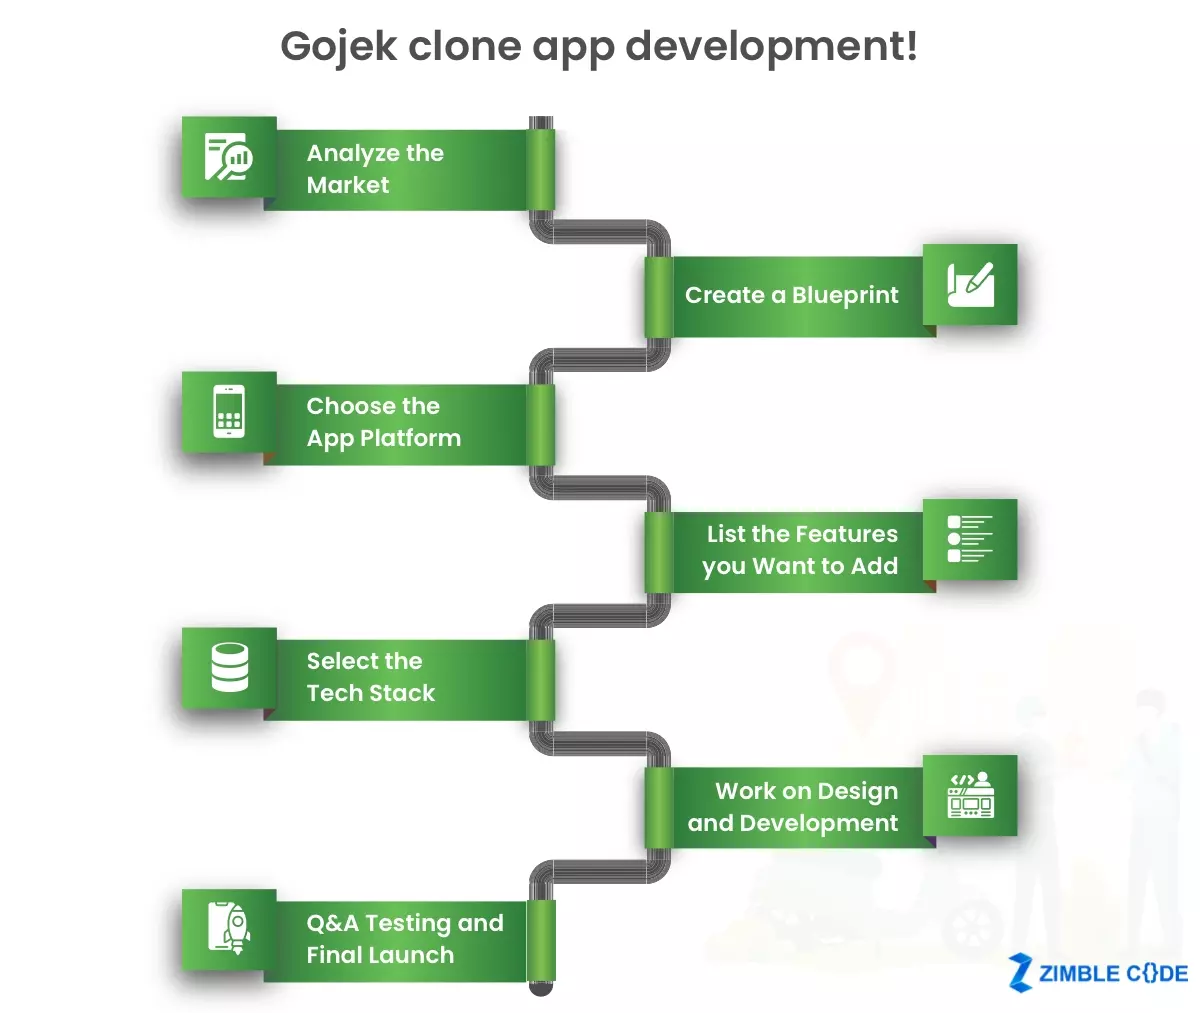 Gojek clone app development